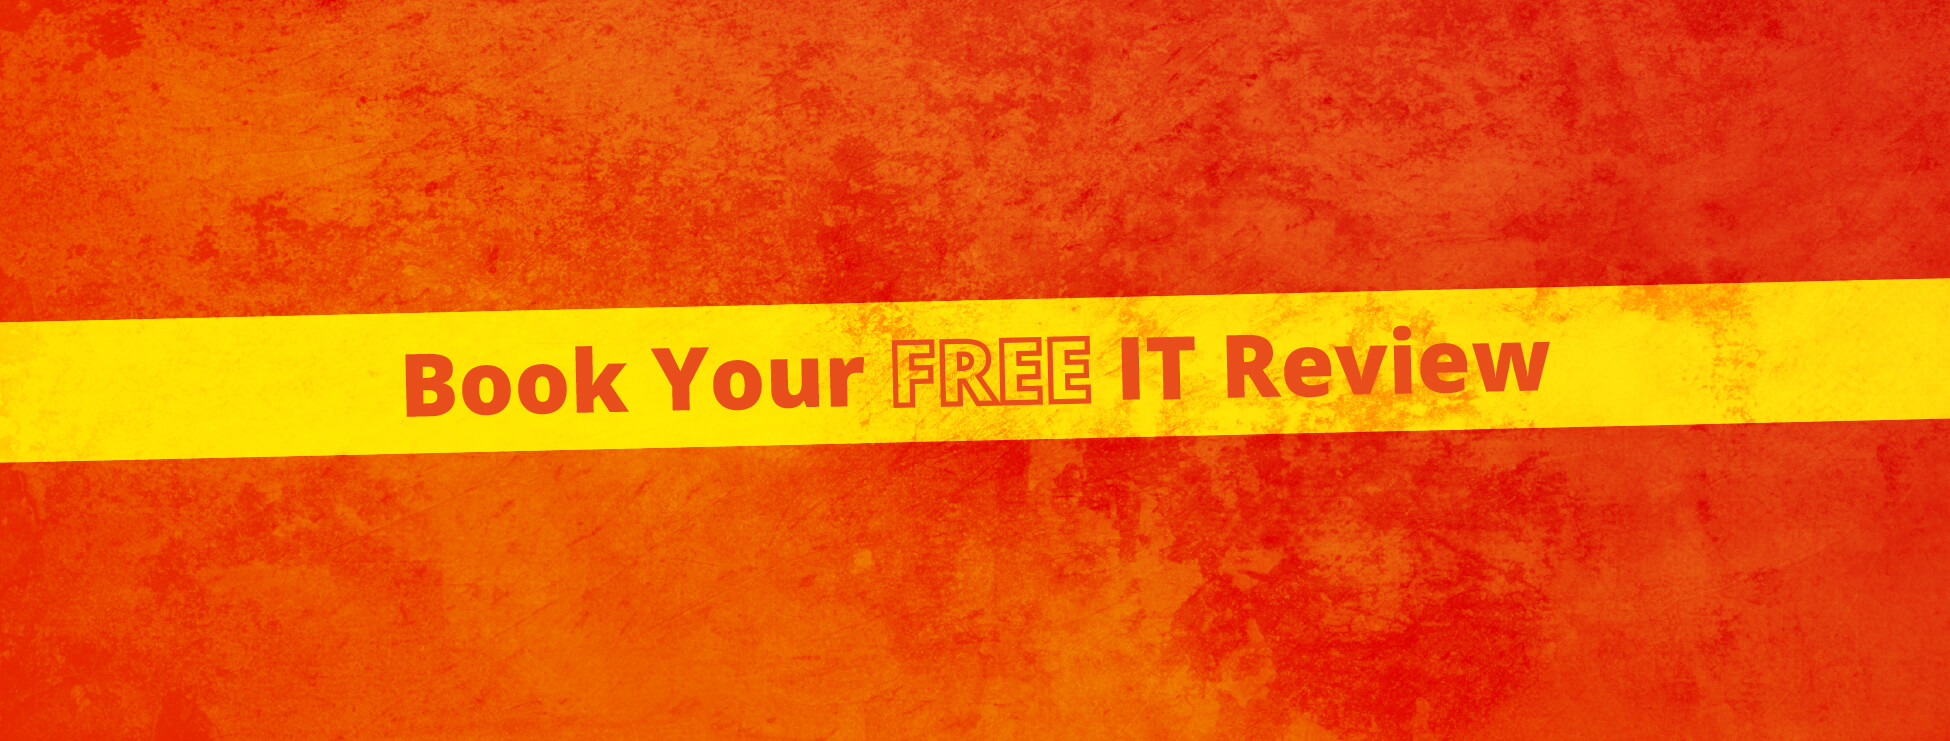 Free IT Review